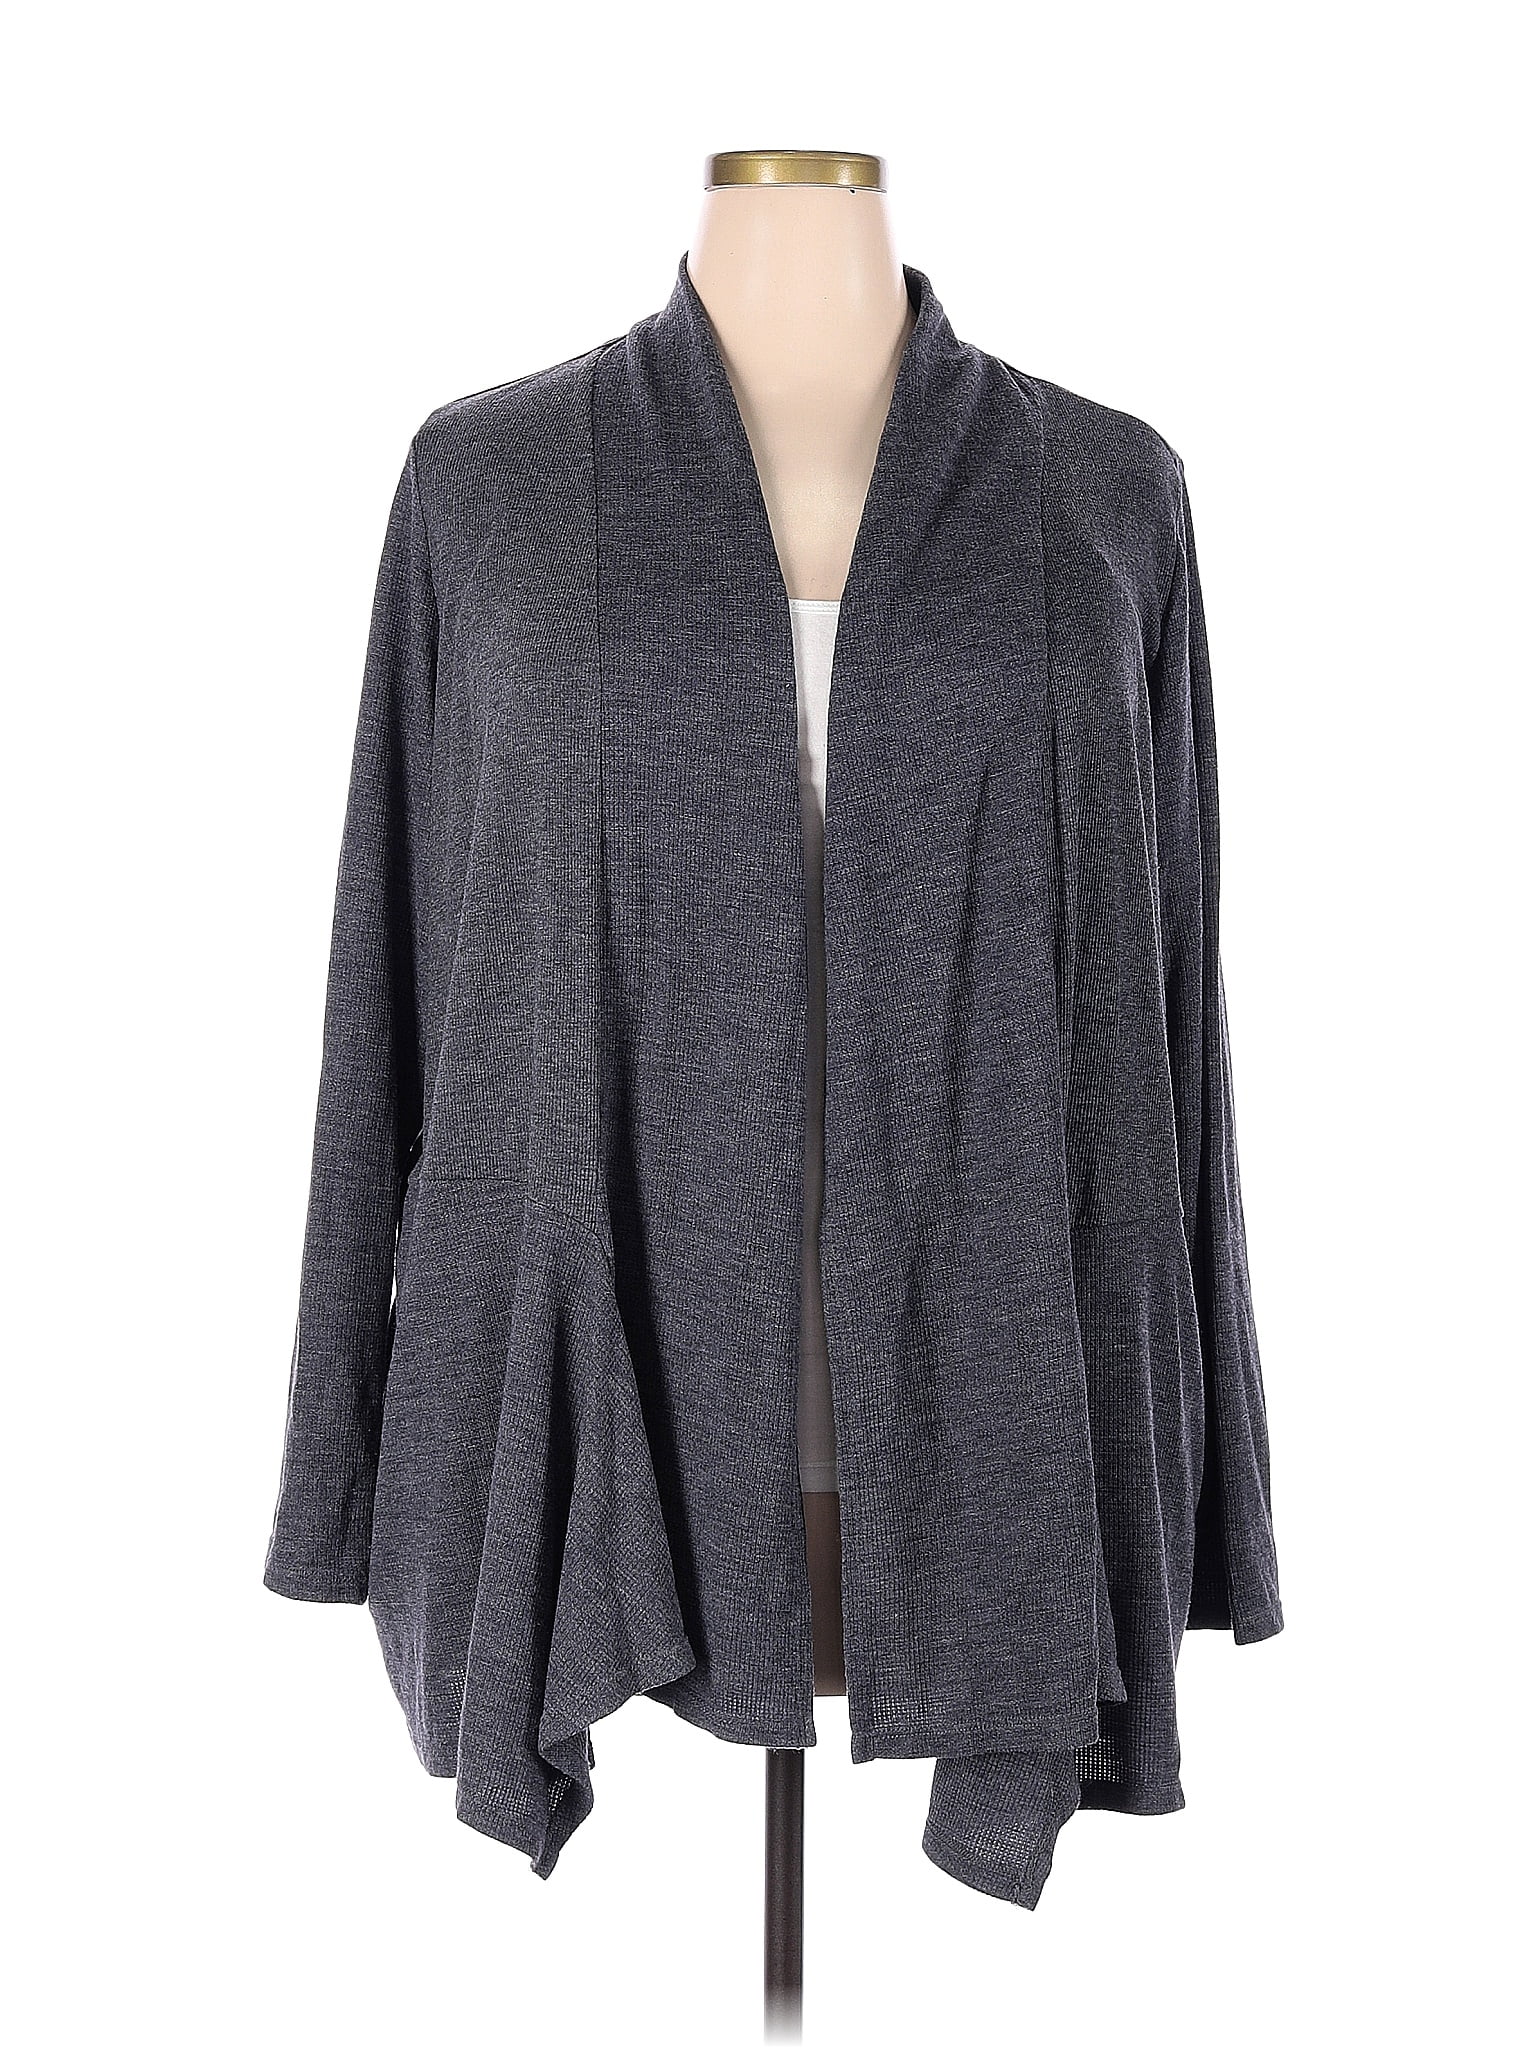 IIN Color Block Gray Cardigan Size 2X (Plus) - 70% off | ThredUp